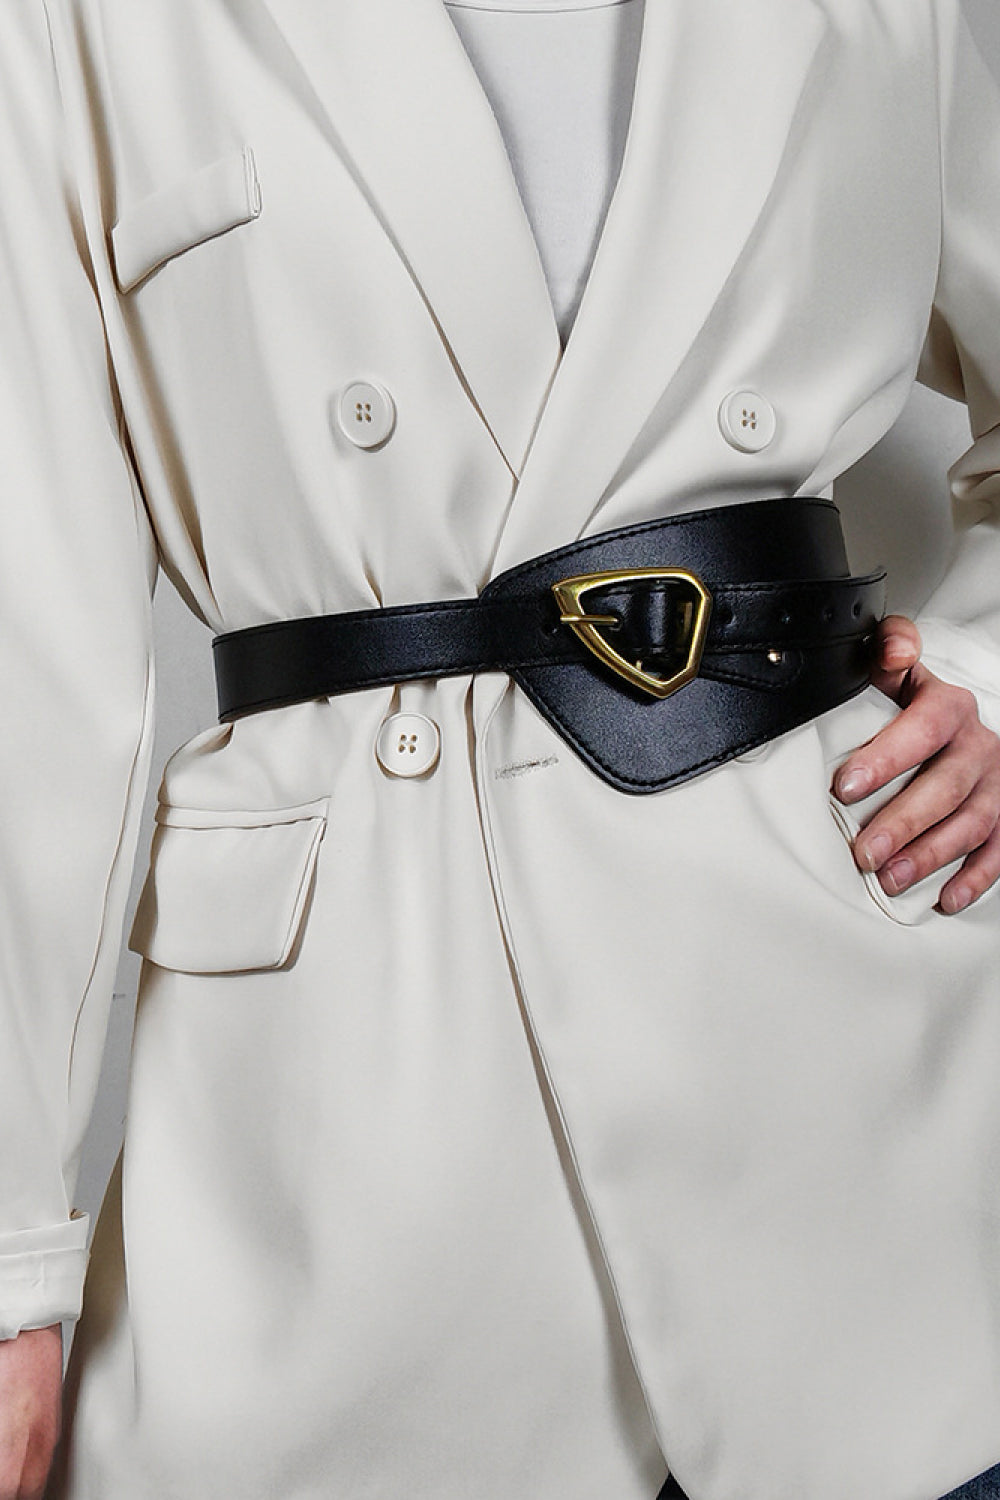 The Olivet PU Leather Belt